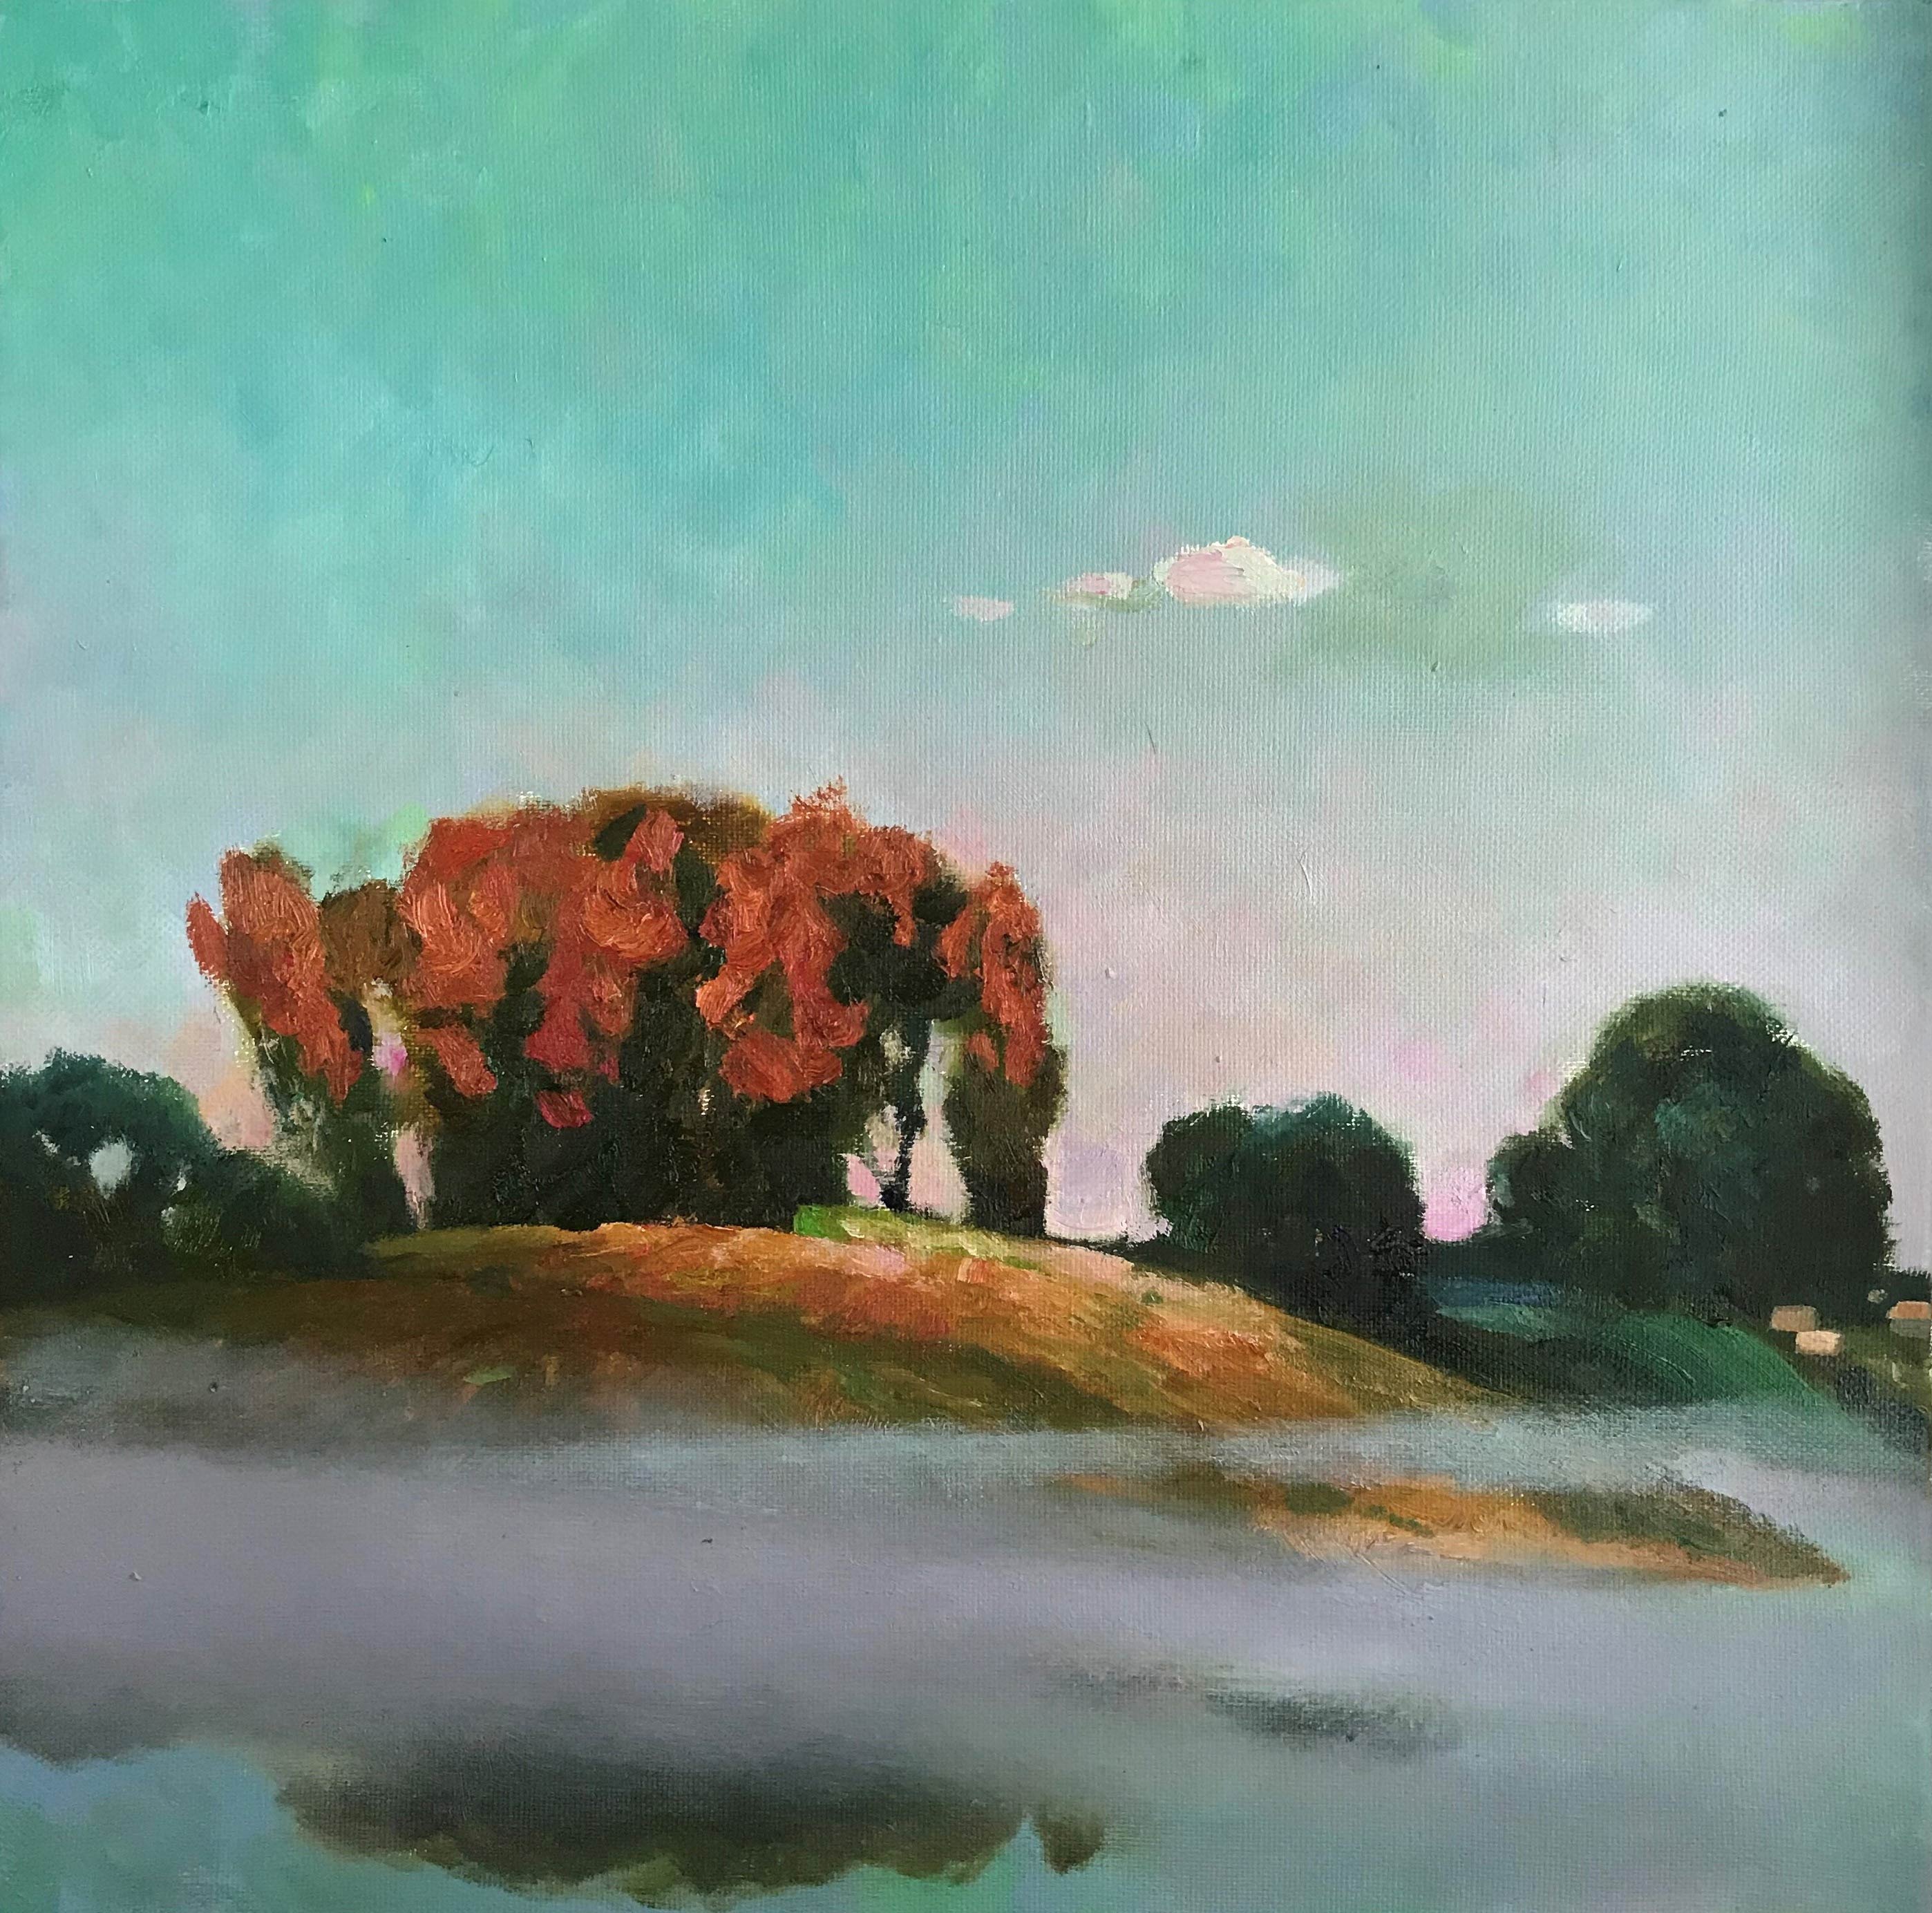 Lilac Fog - 1, Evgeniya Davletshina, Buy the painting Oil